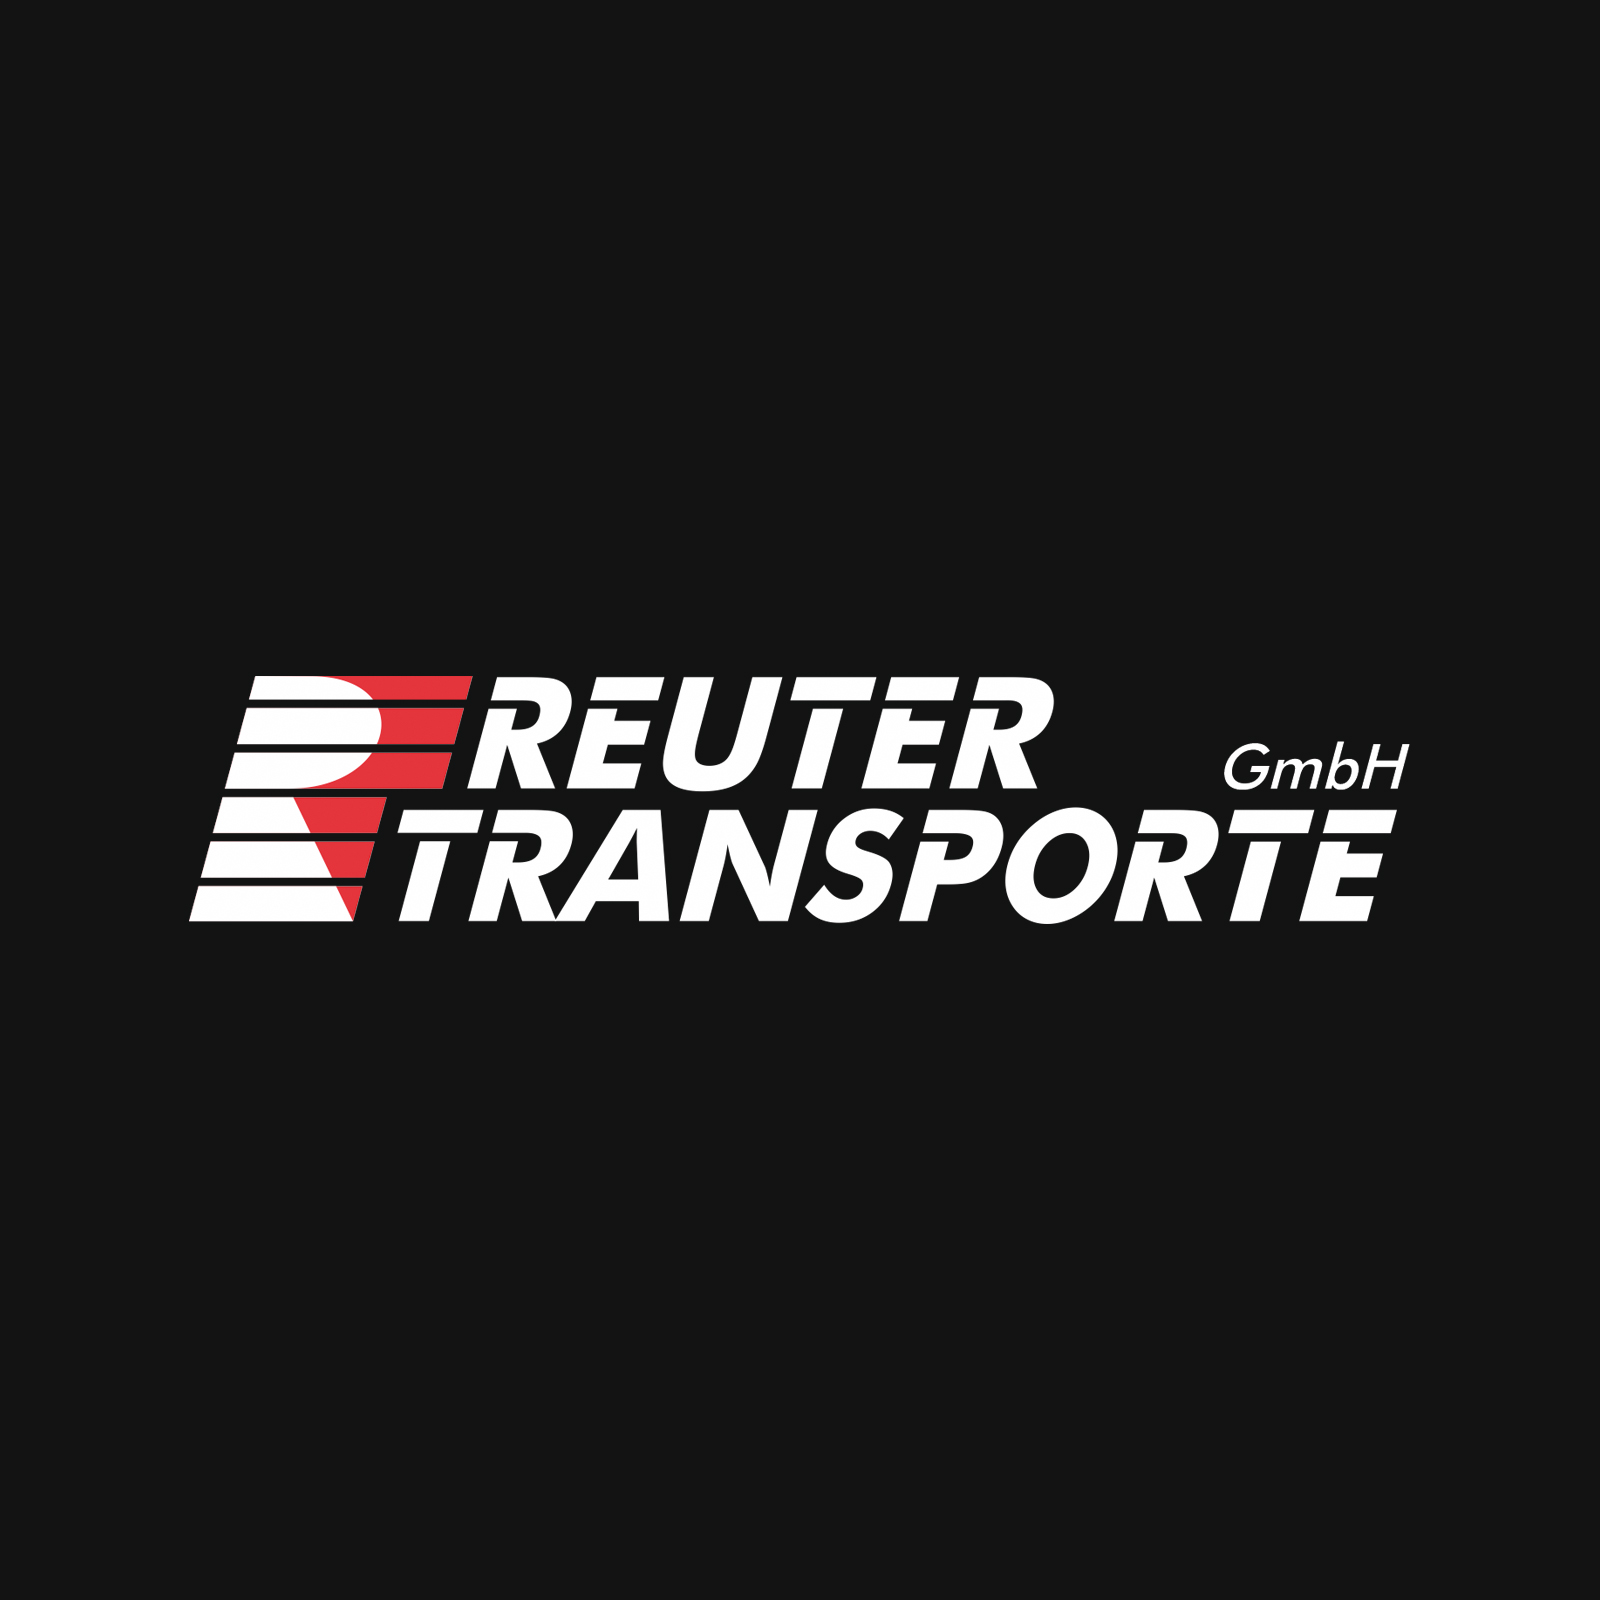 Reuter Transporte GmbH